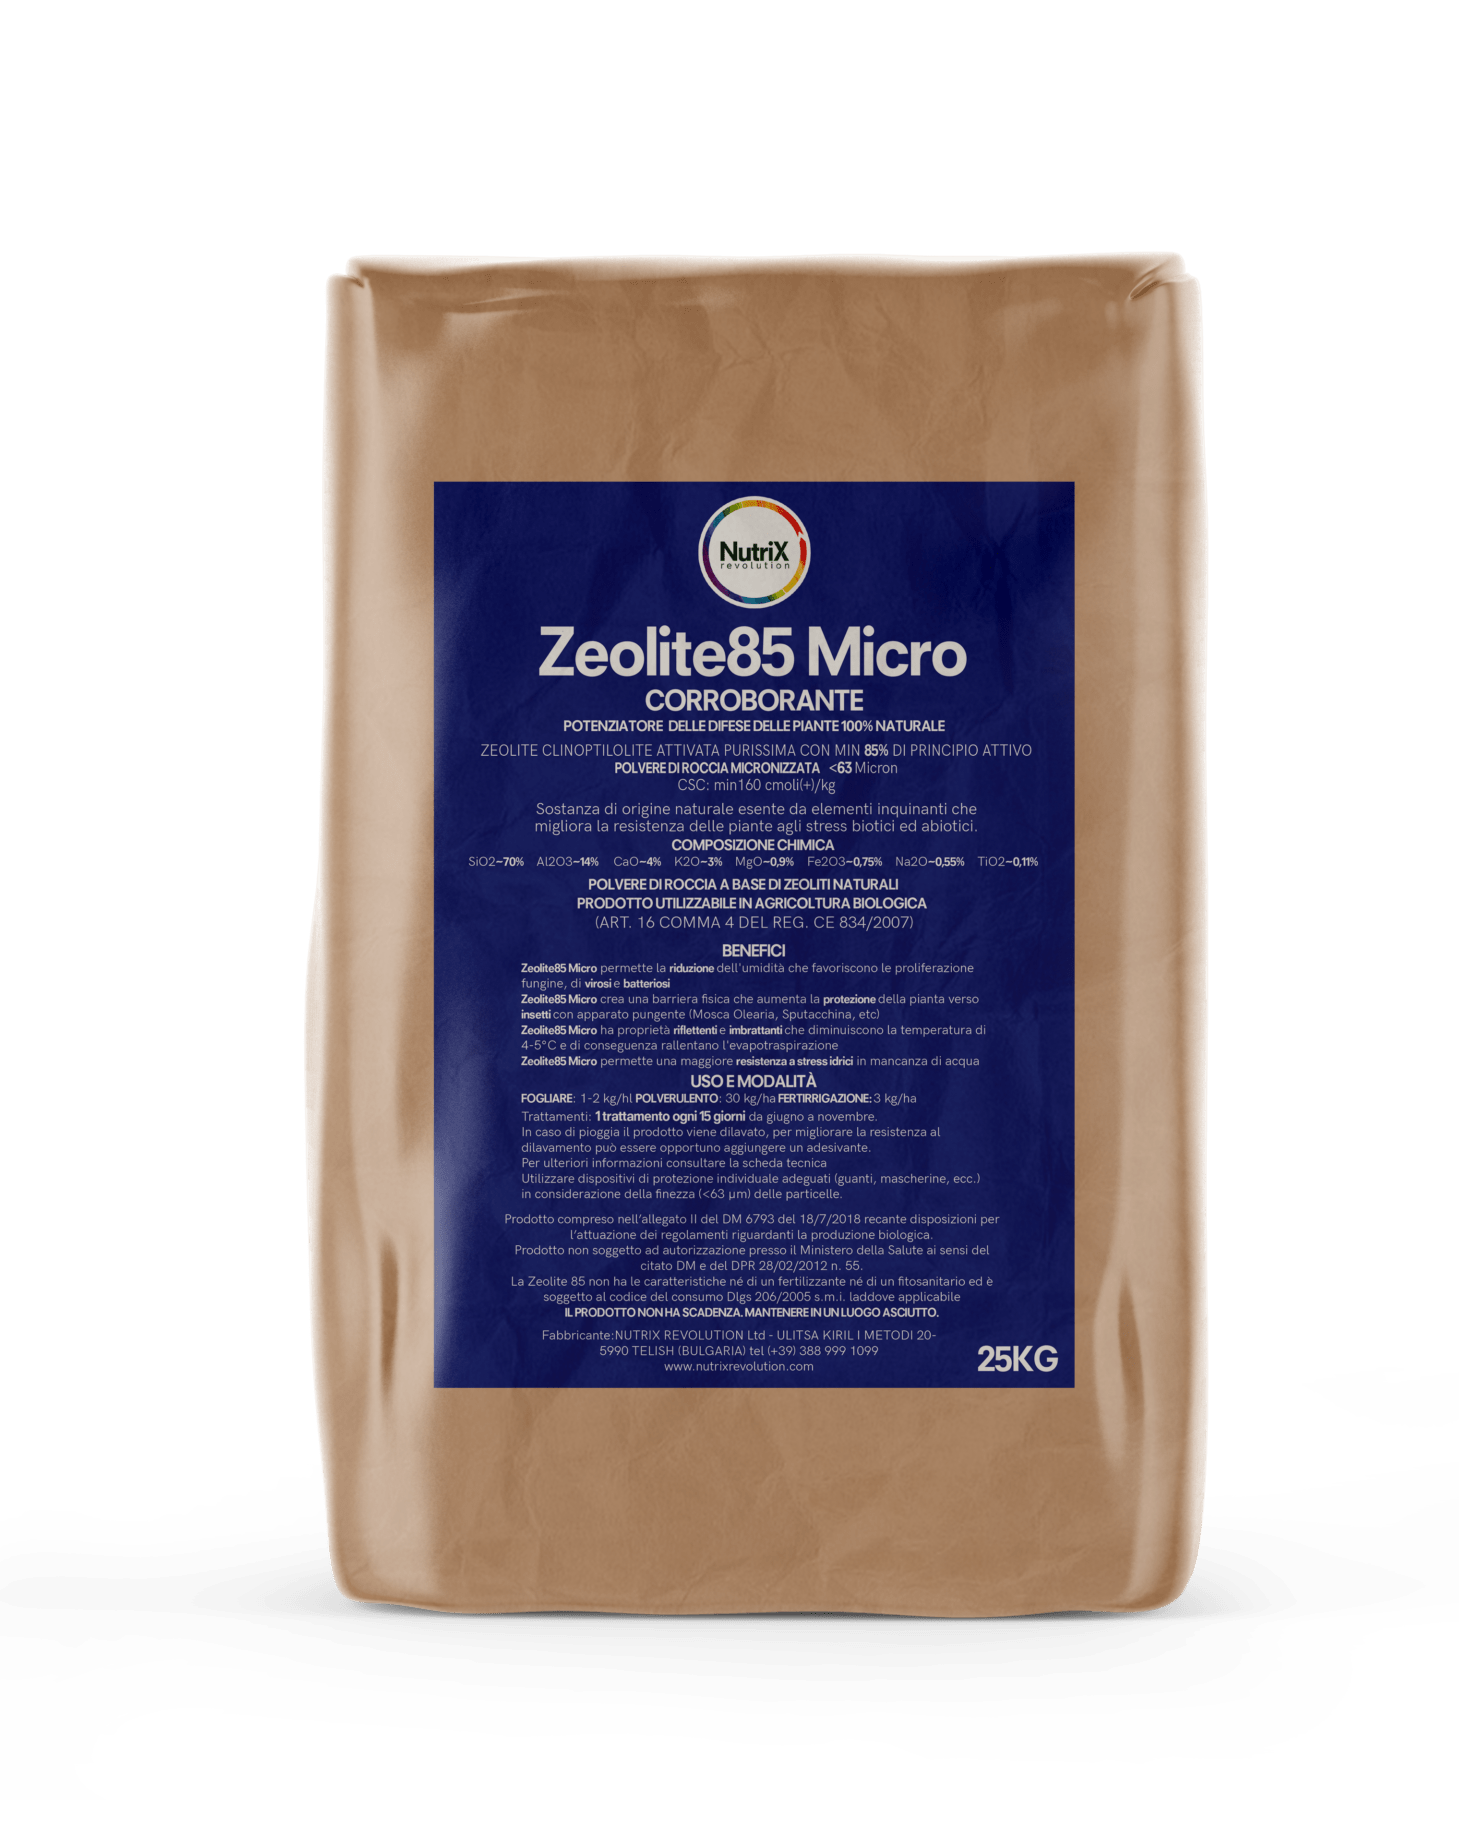 Zeolite micronizzata per l'agricoltura biologica